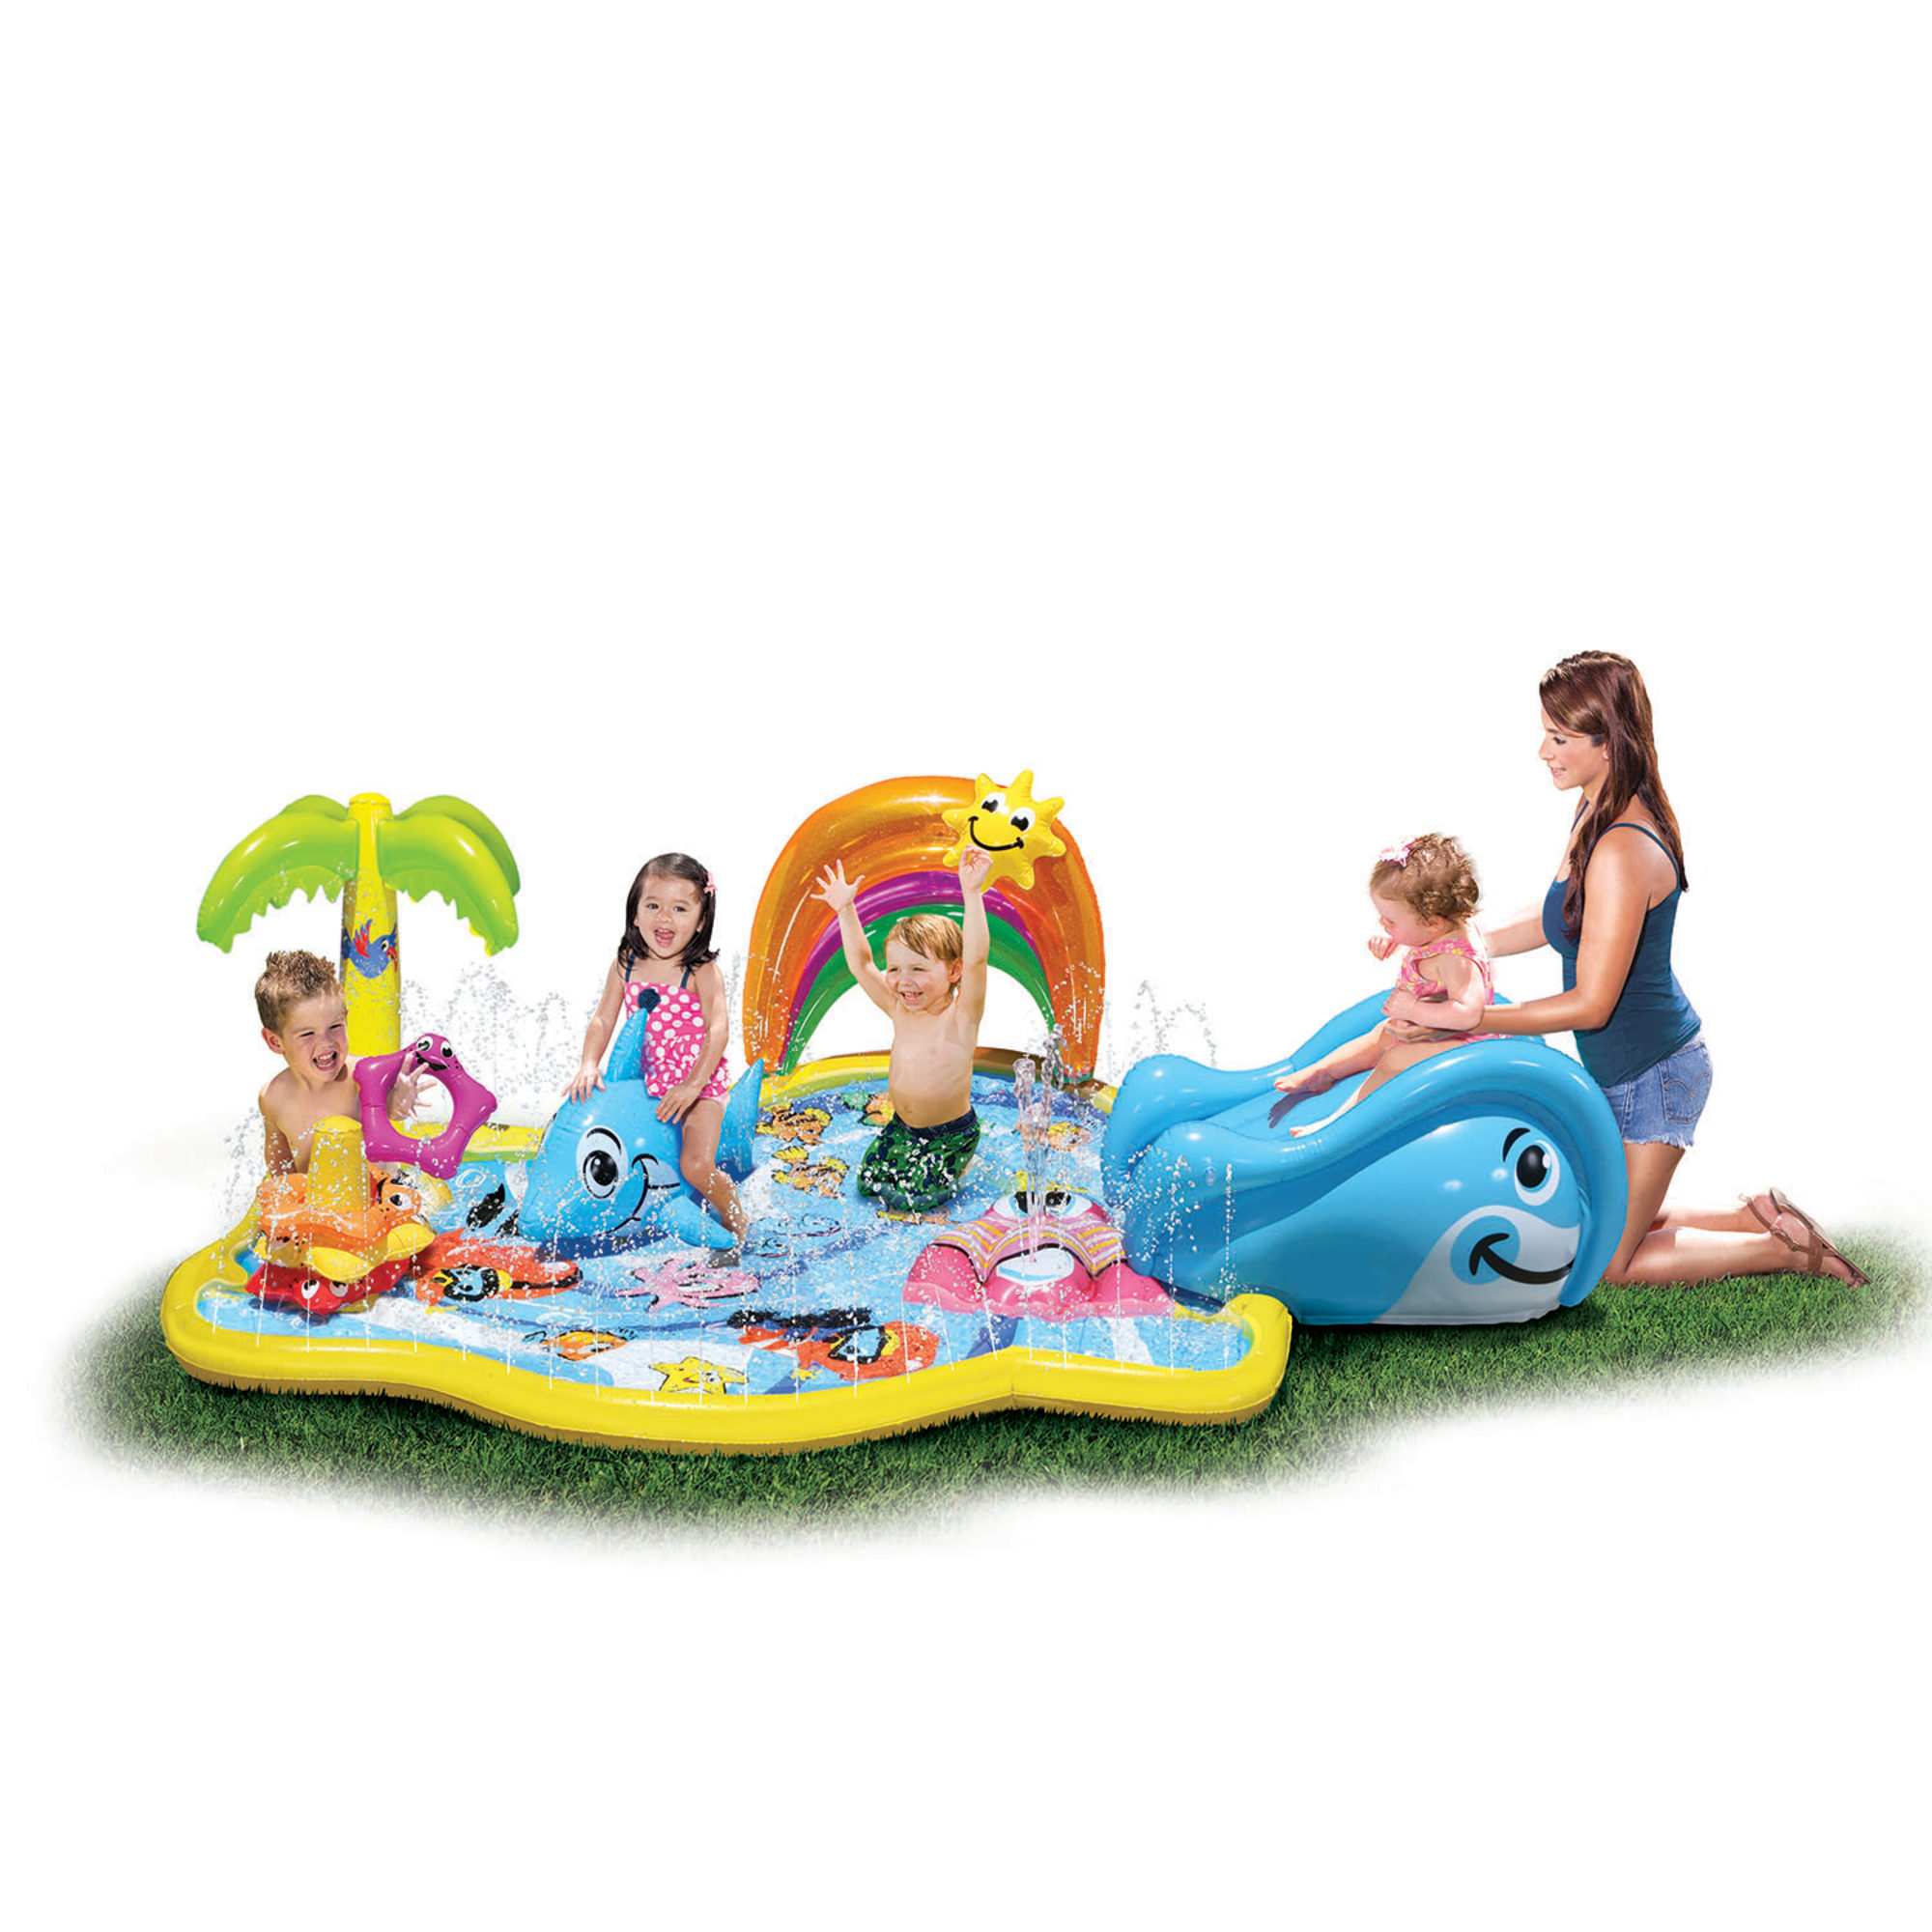 Banzai Splish Splash Water Park JR, Length: 90 in, Width: 52 in, Height: 24 in, Junior Inflatable Outdoor Backyard Water Splash Toy - image 1 of 5